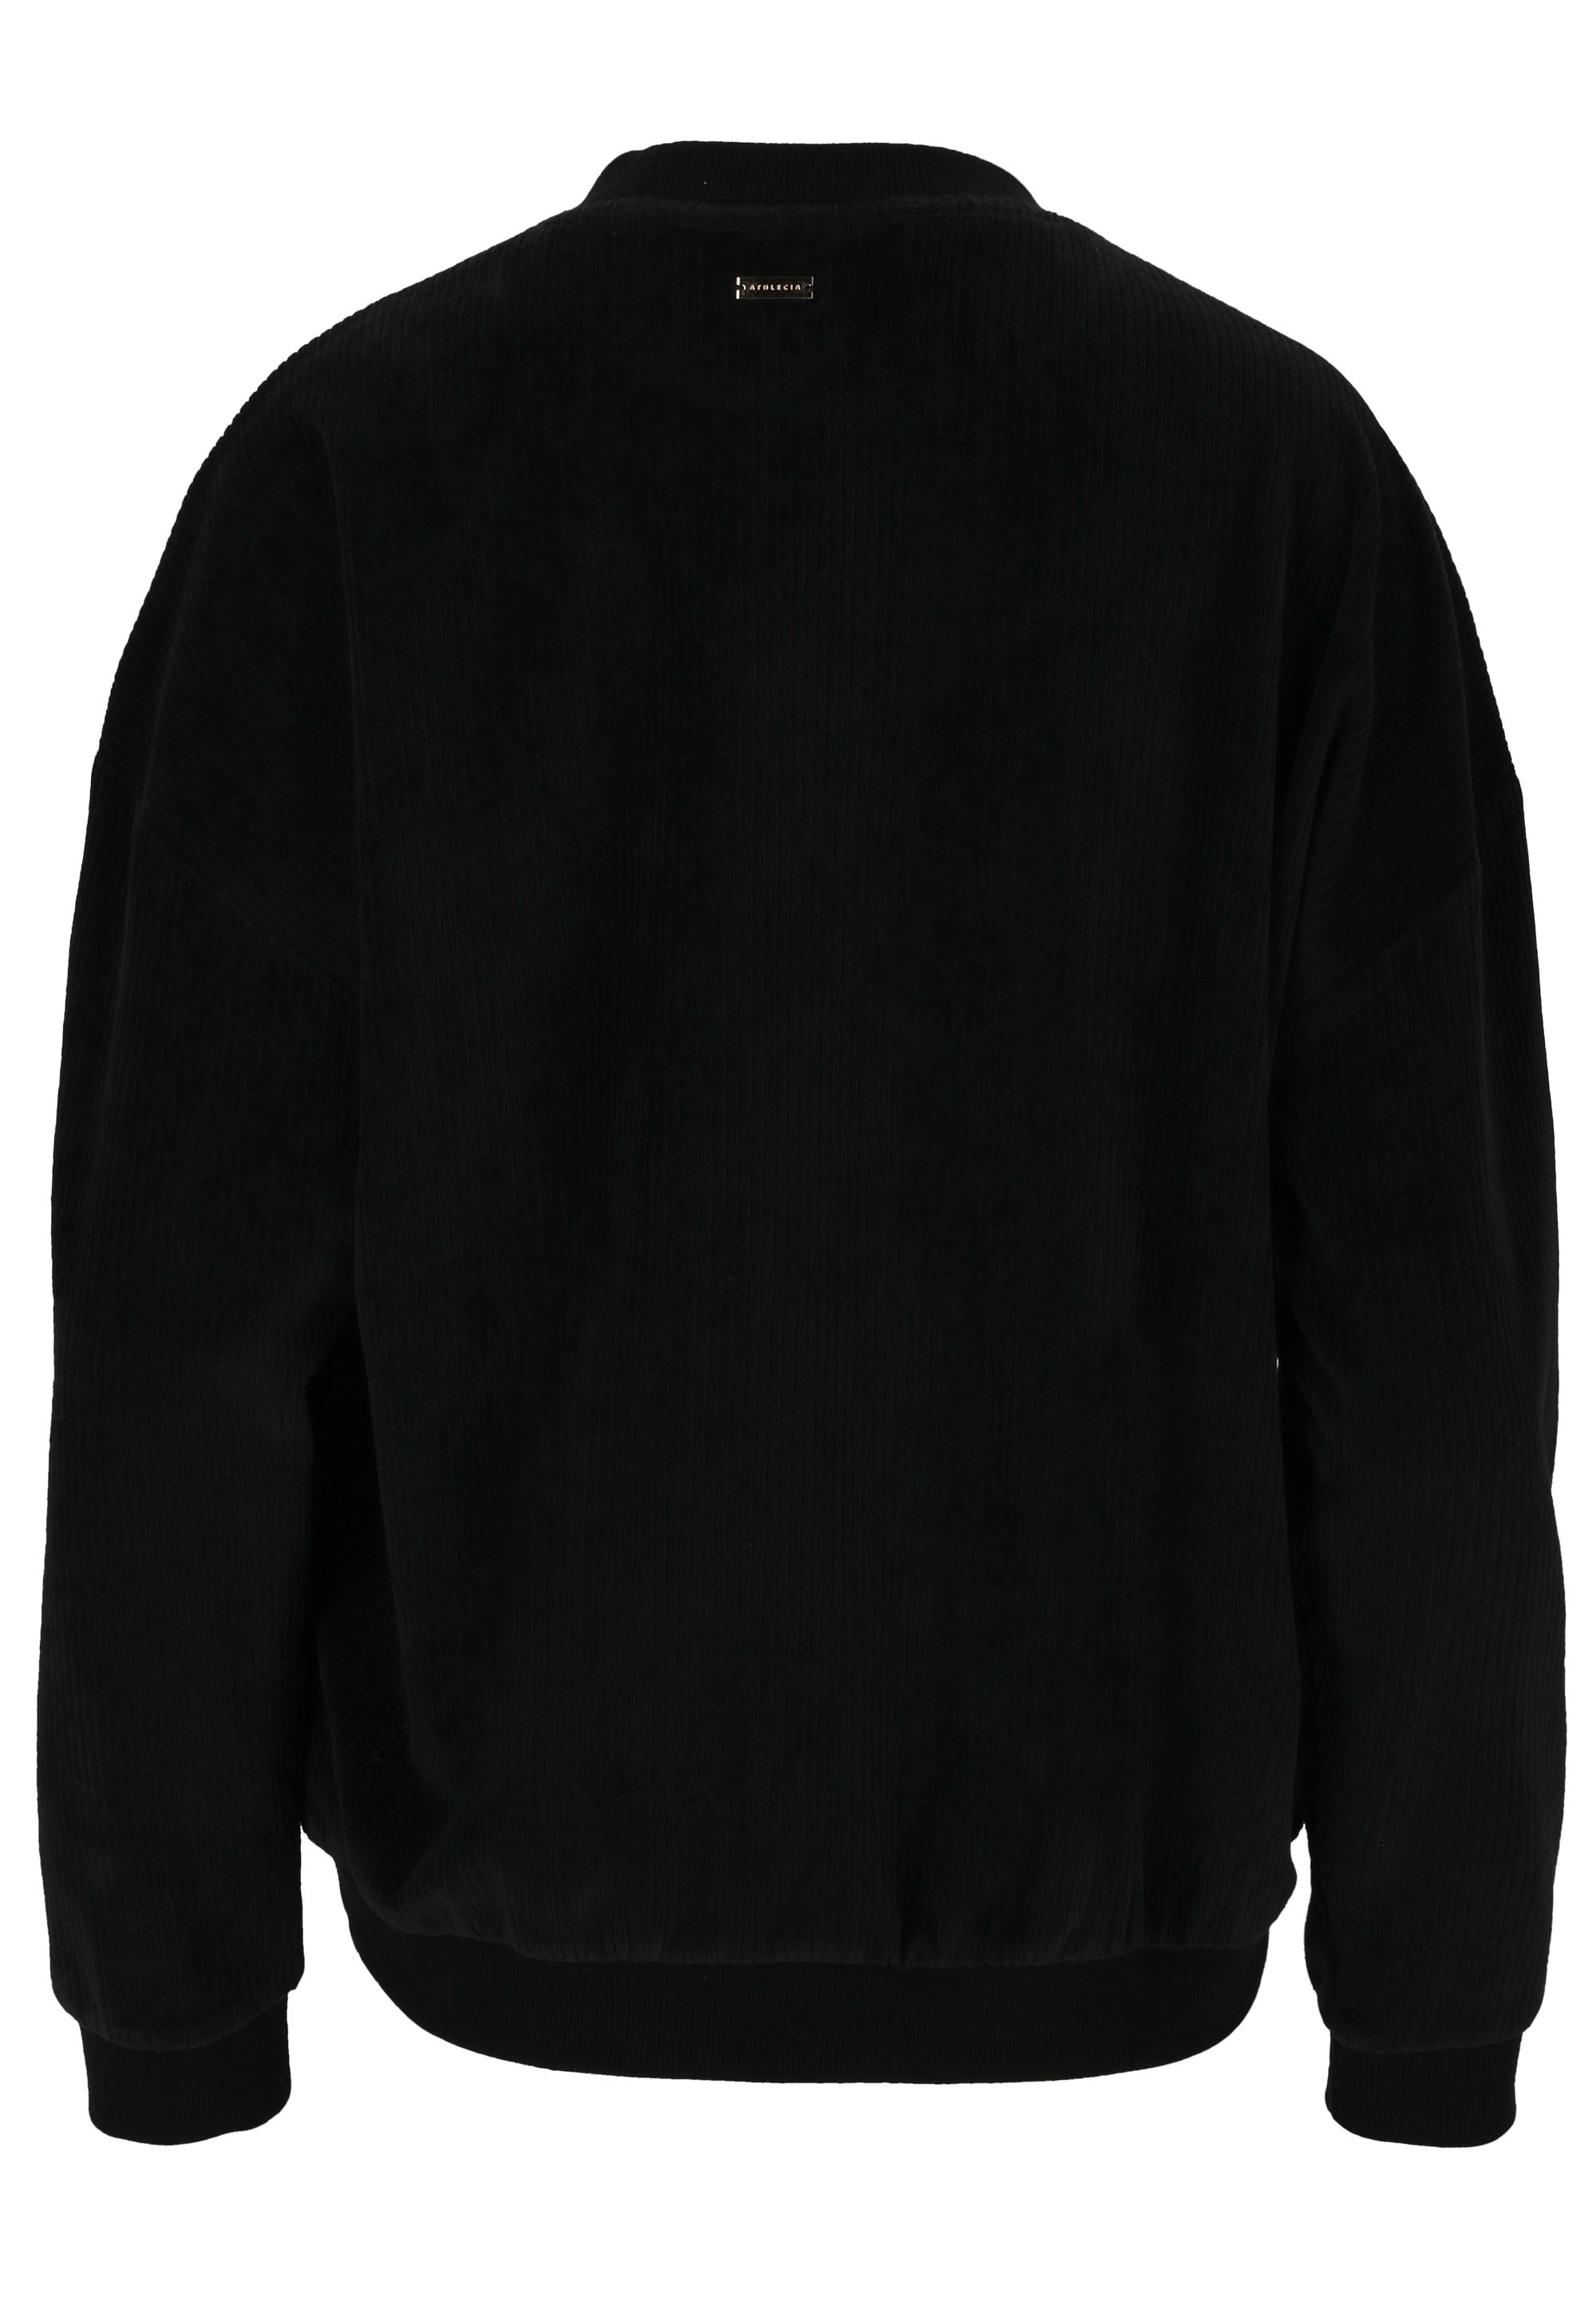 ATHLECIA Sweatshirt »Marlie«, im trendigen Cord-Look